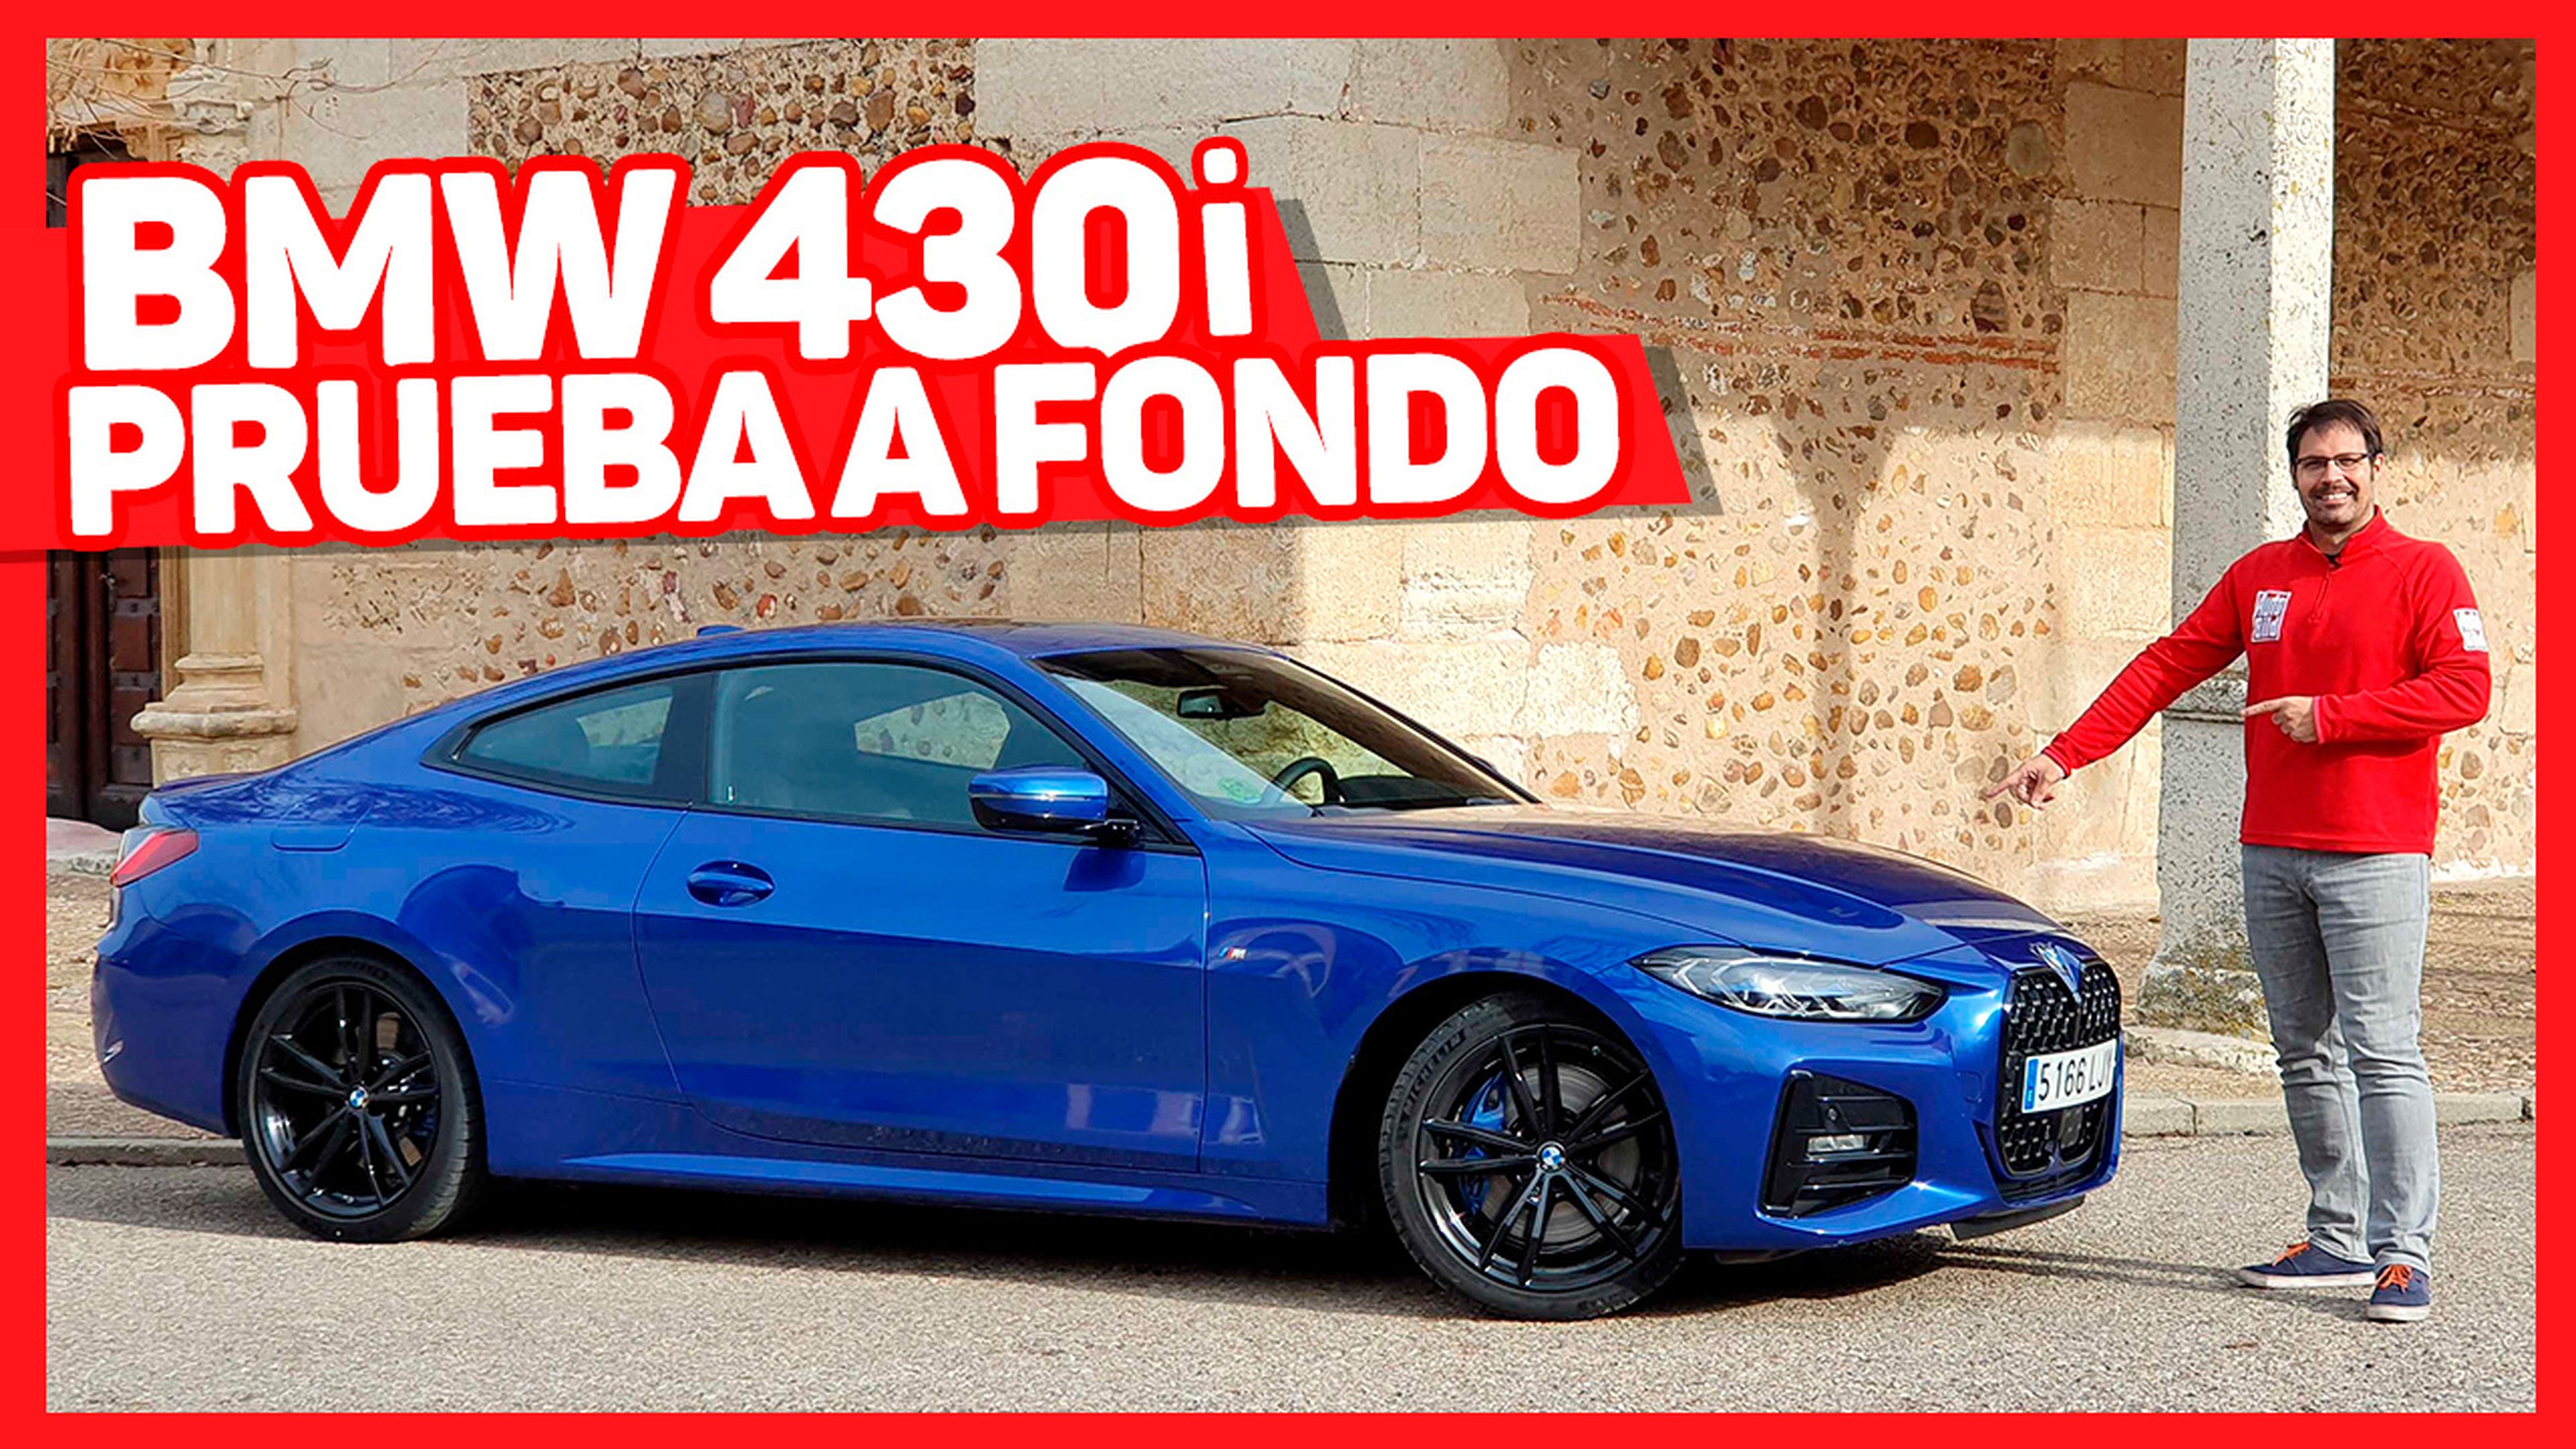 VÍDEO: BMW 430i Coupé 2021 | PRUEBA a FONDO, ¿cómo respoden sus 258 CV?